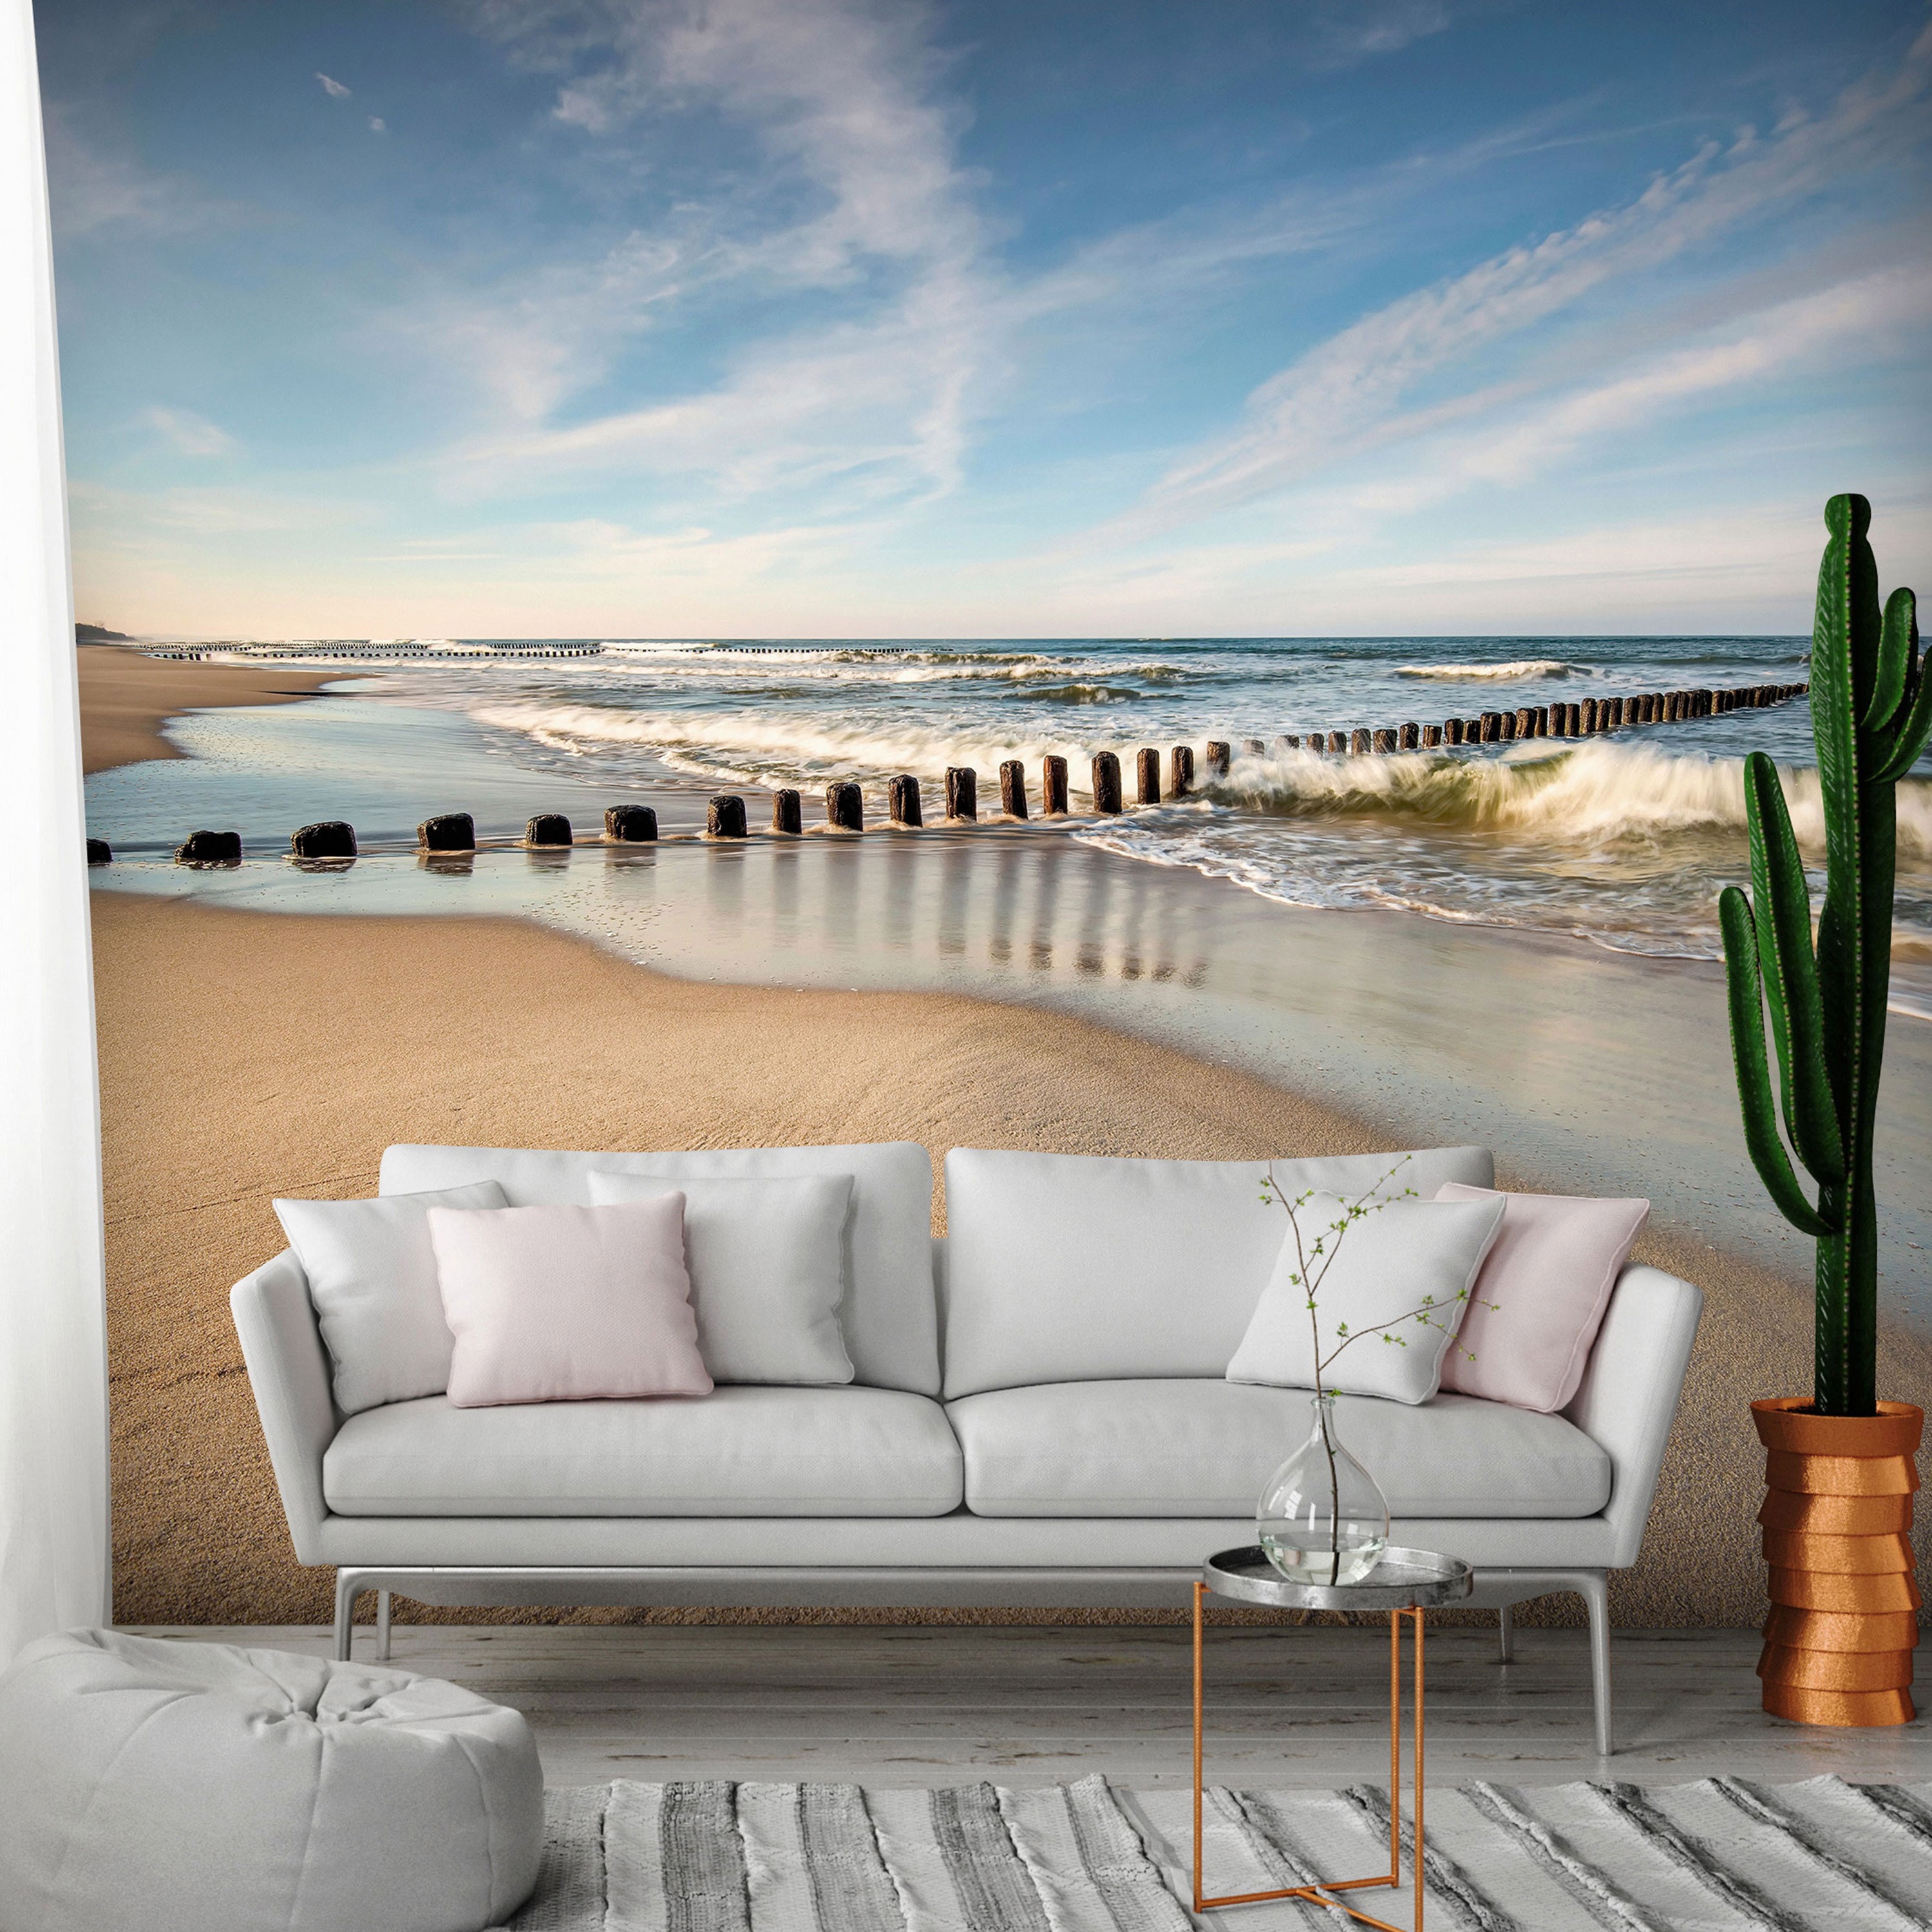 Self-adhesive Wallpaper - Sea Breeze - 147x105